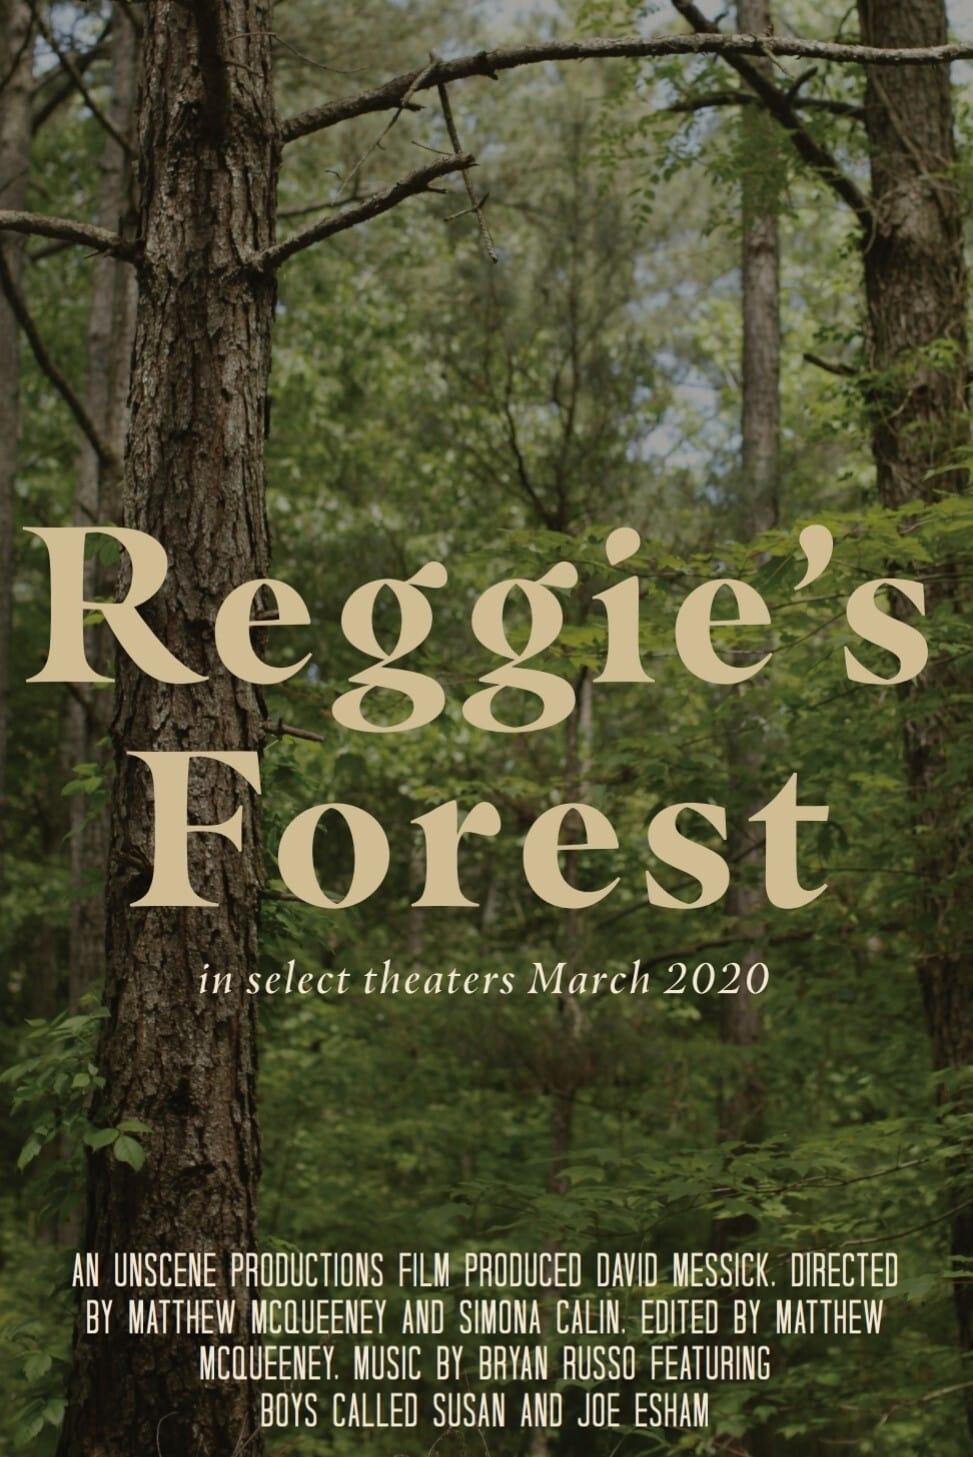 Reggie's Forest poster